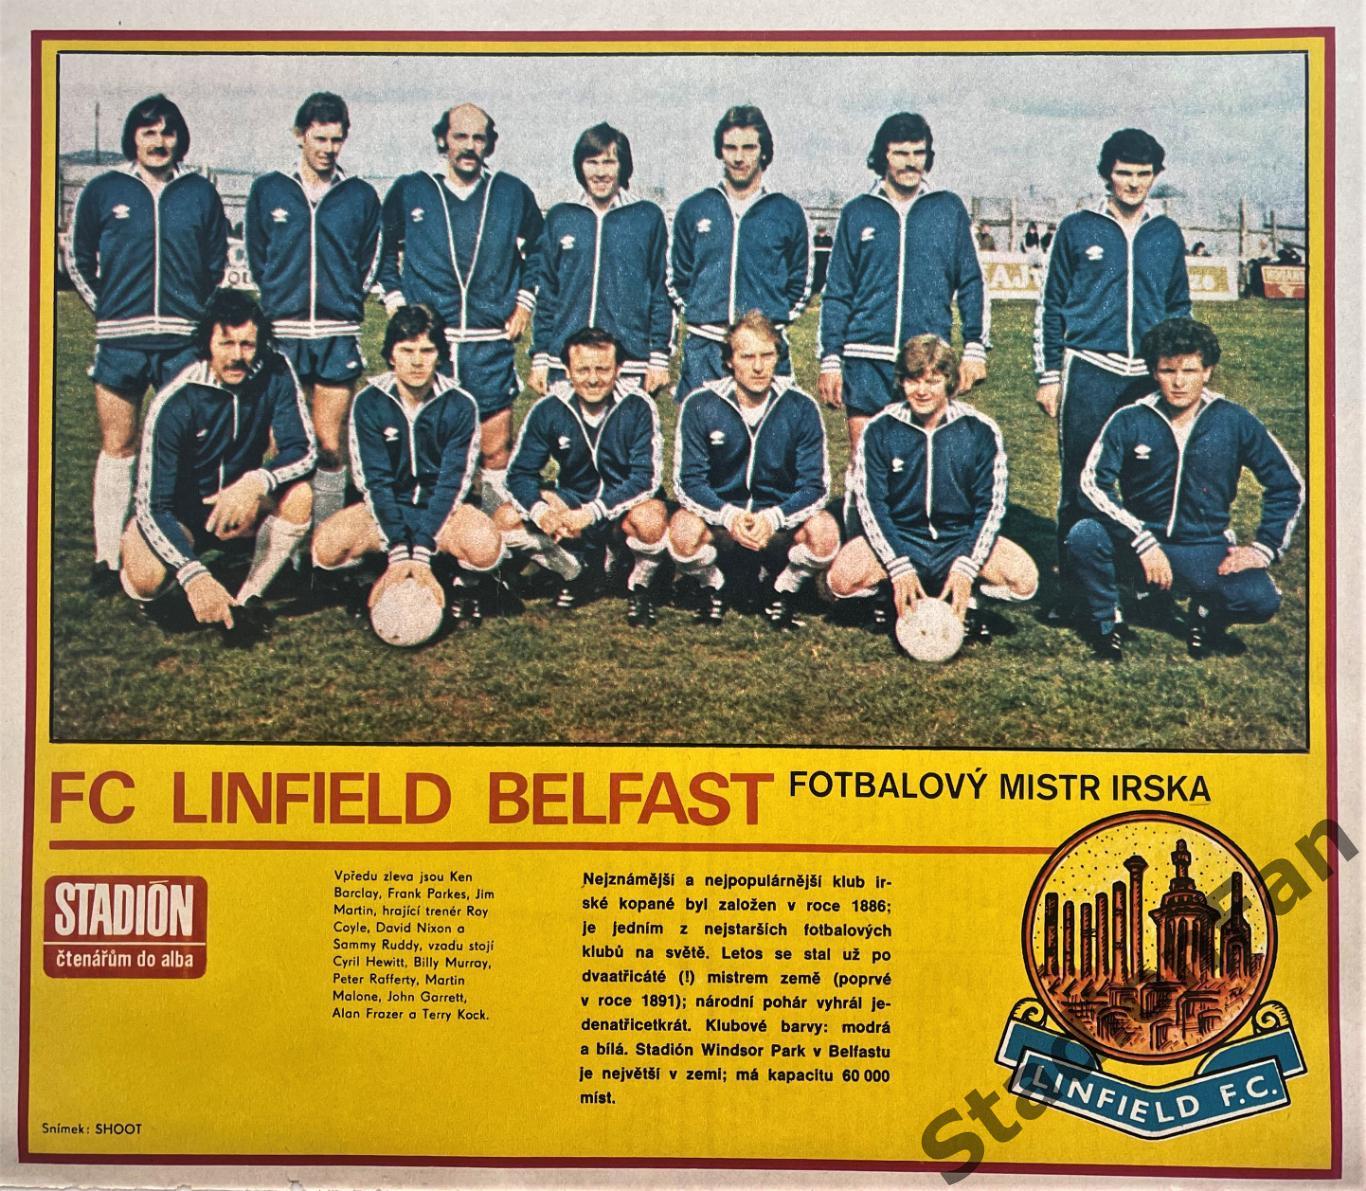 Постер из журнала Стадион (Stadion) - Linfield Belfast, 1979.